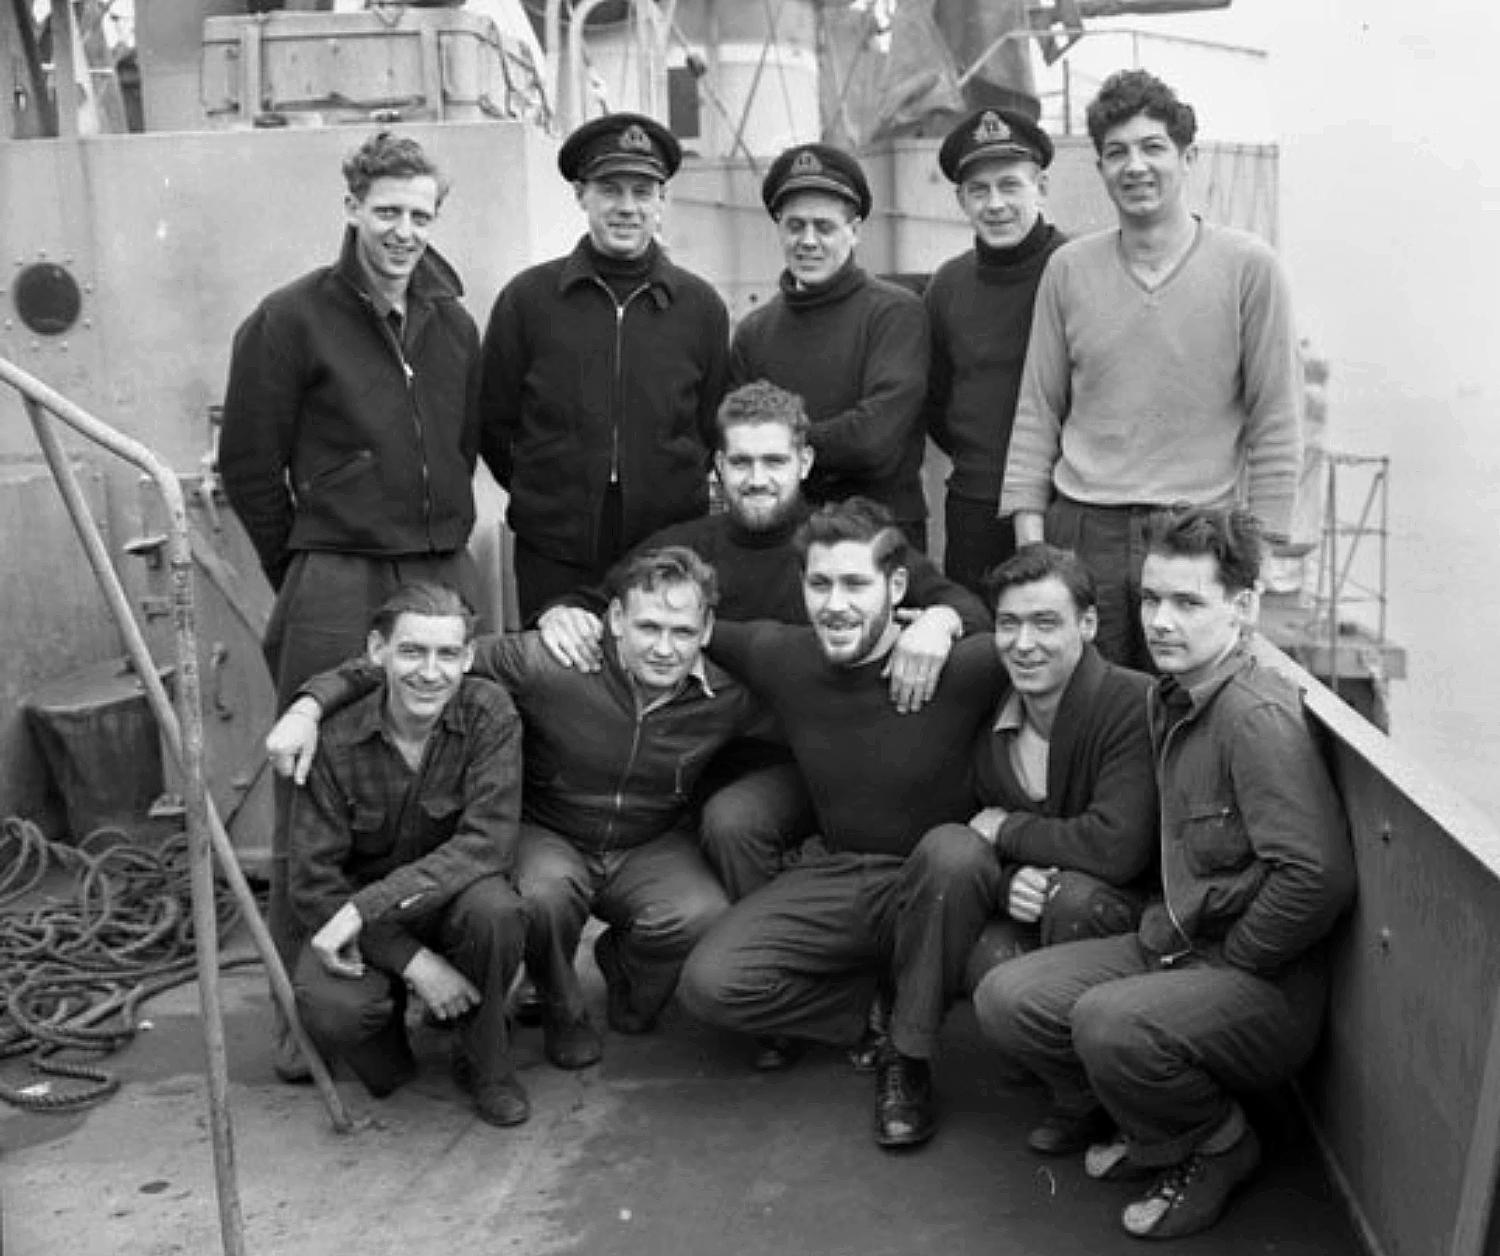 HMCS Chilliwack Boarding Party, 1944